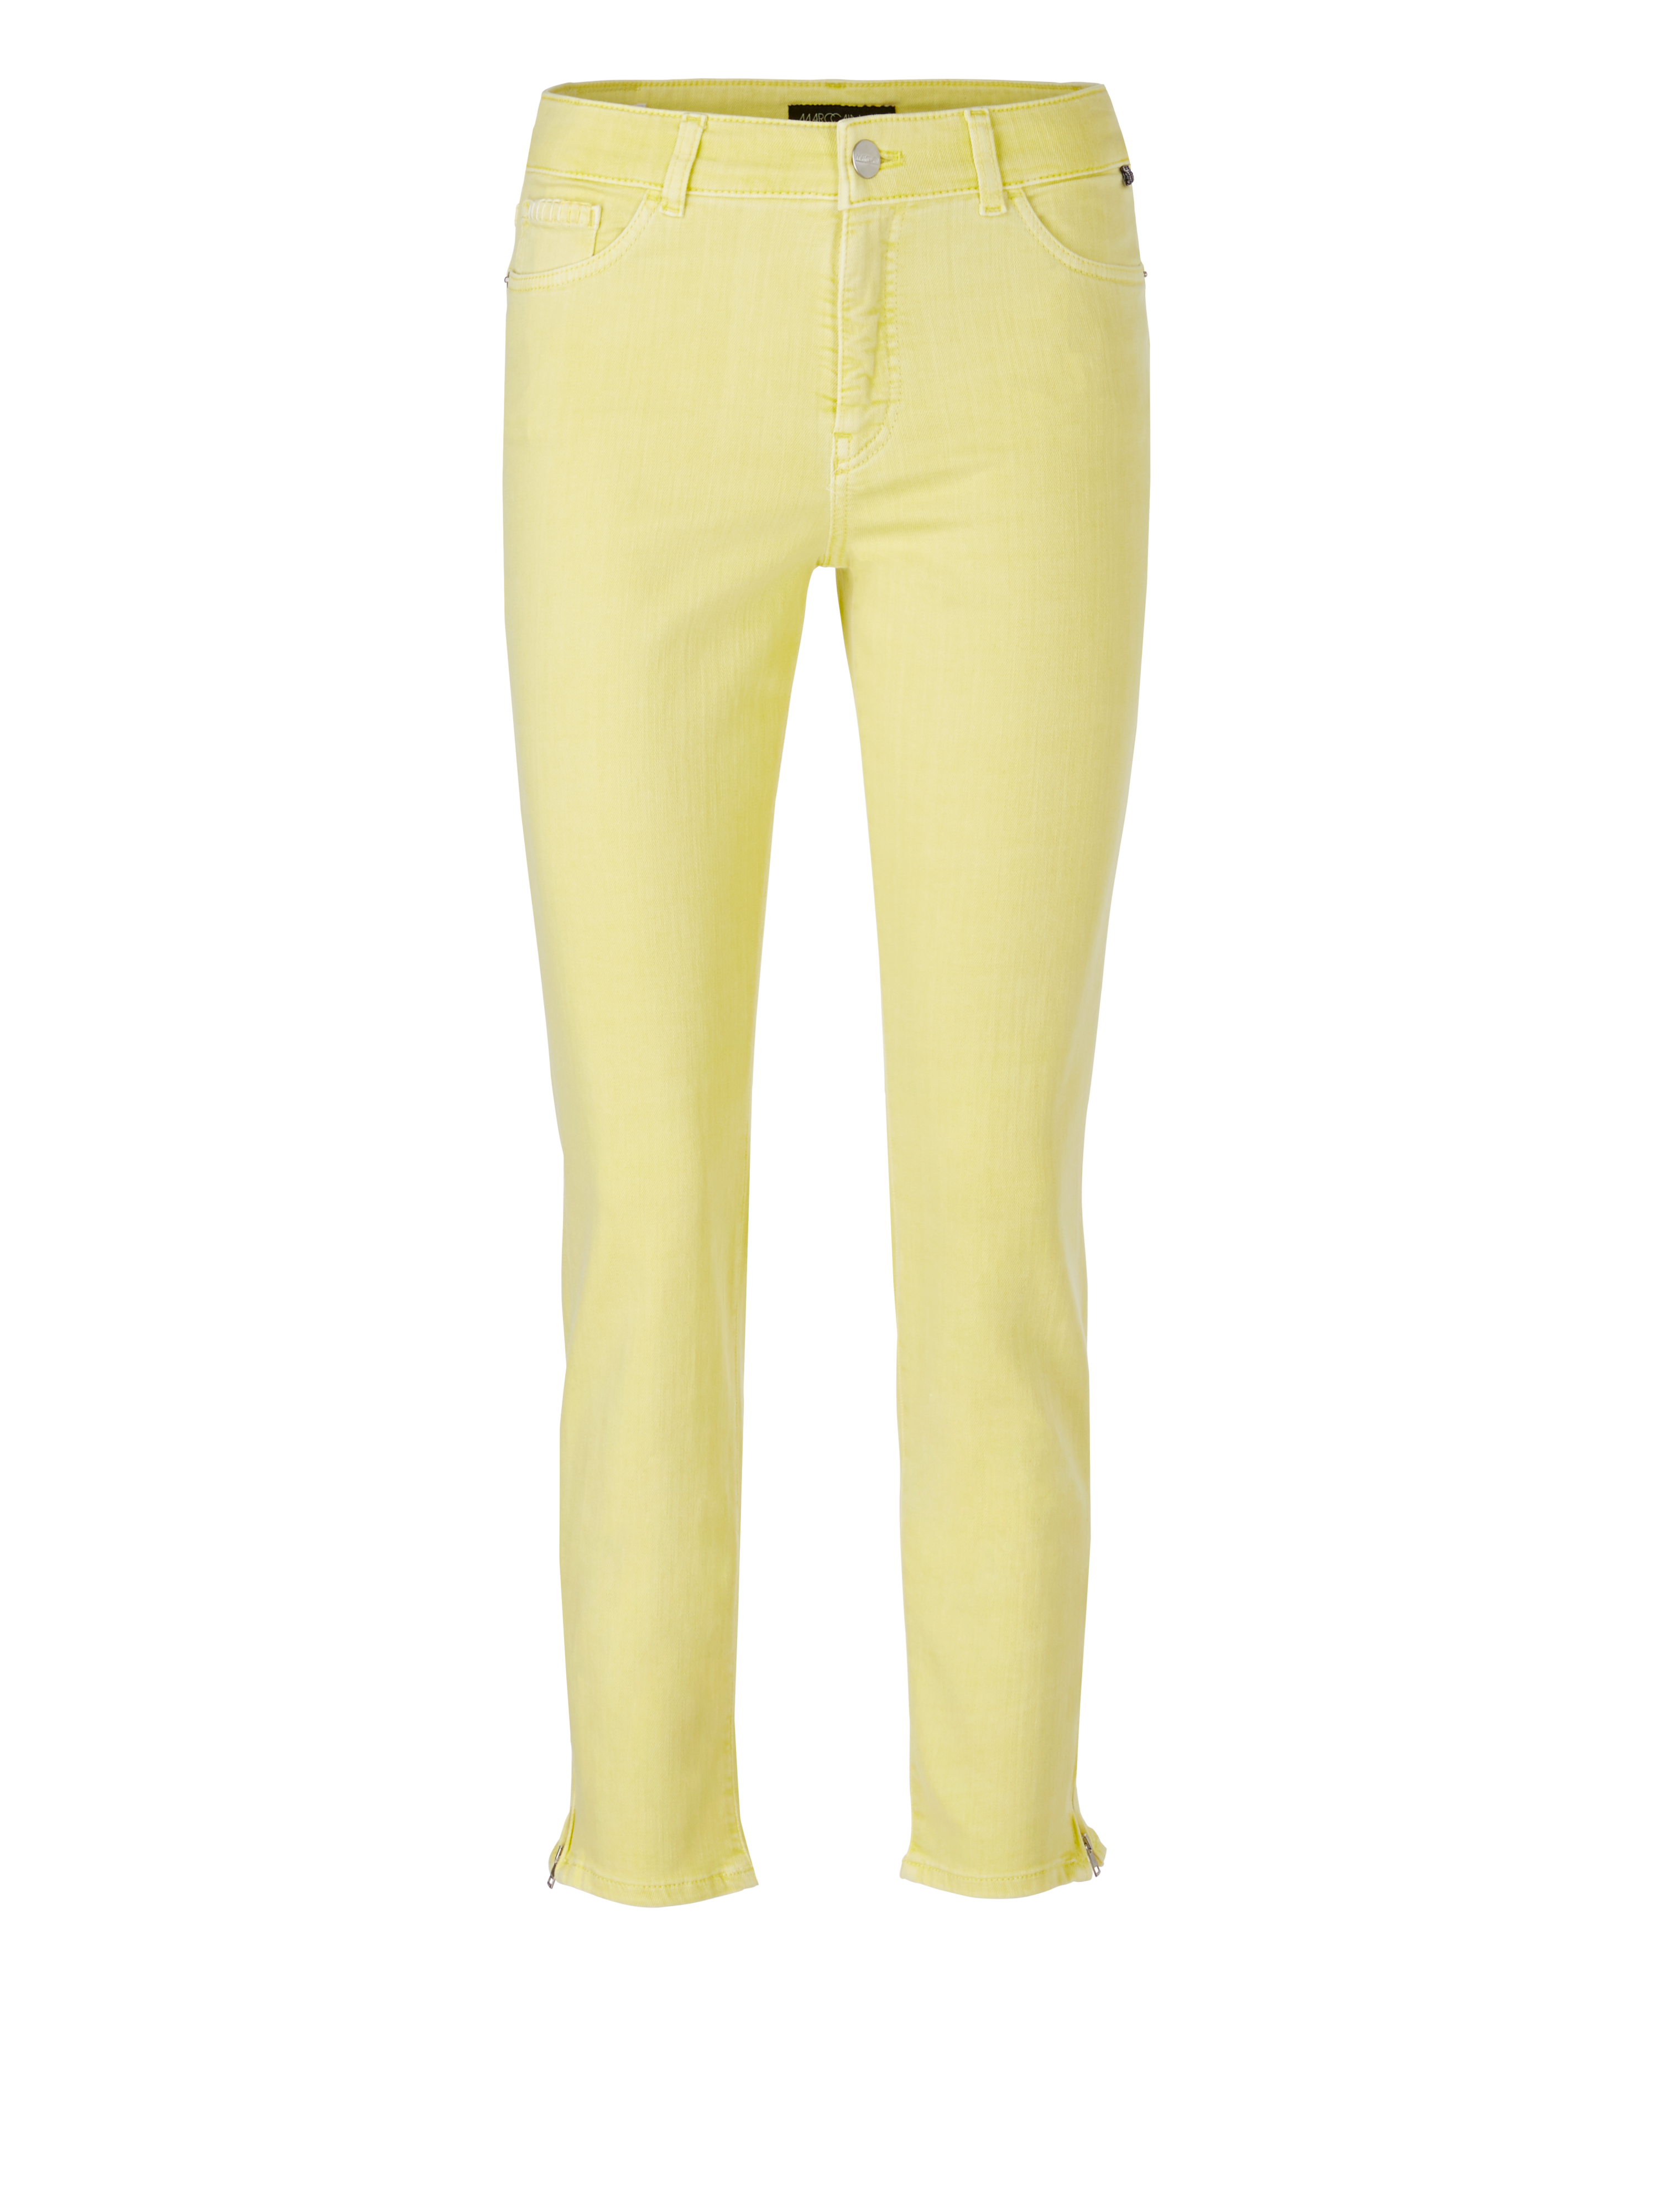 MARC CAIN WP 82.21 D34 SILEA -Jeans Rethink Together Gelb pale lemon